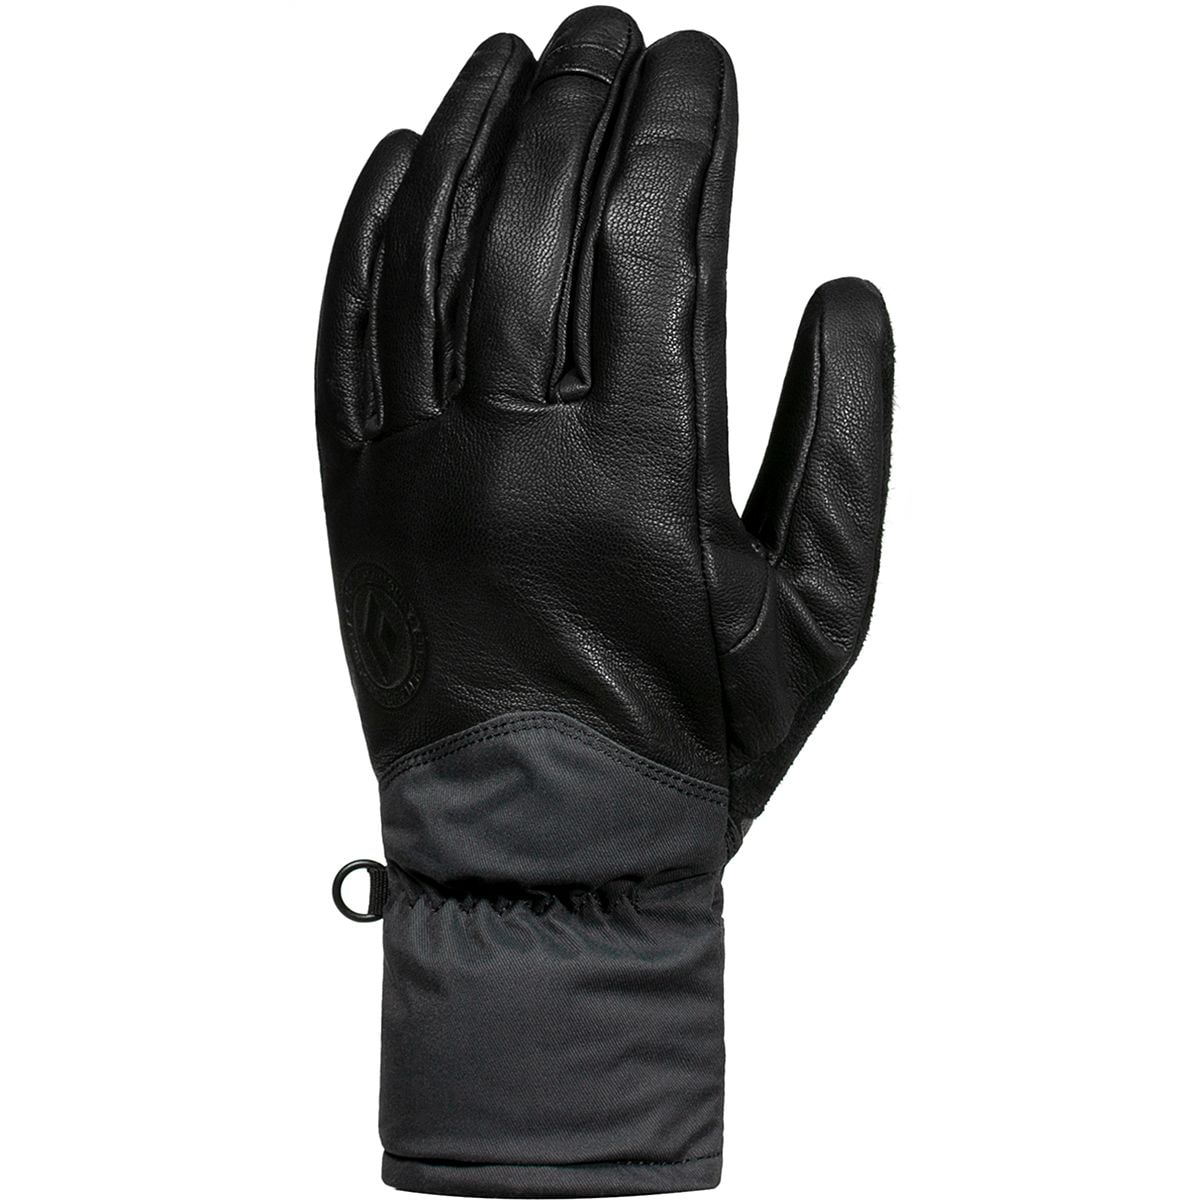 Backcountry x Black Diamond Hot Lap Glove Black Leather S